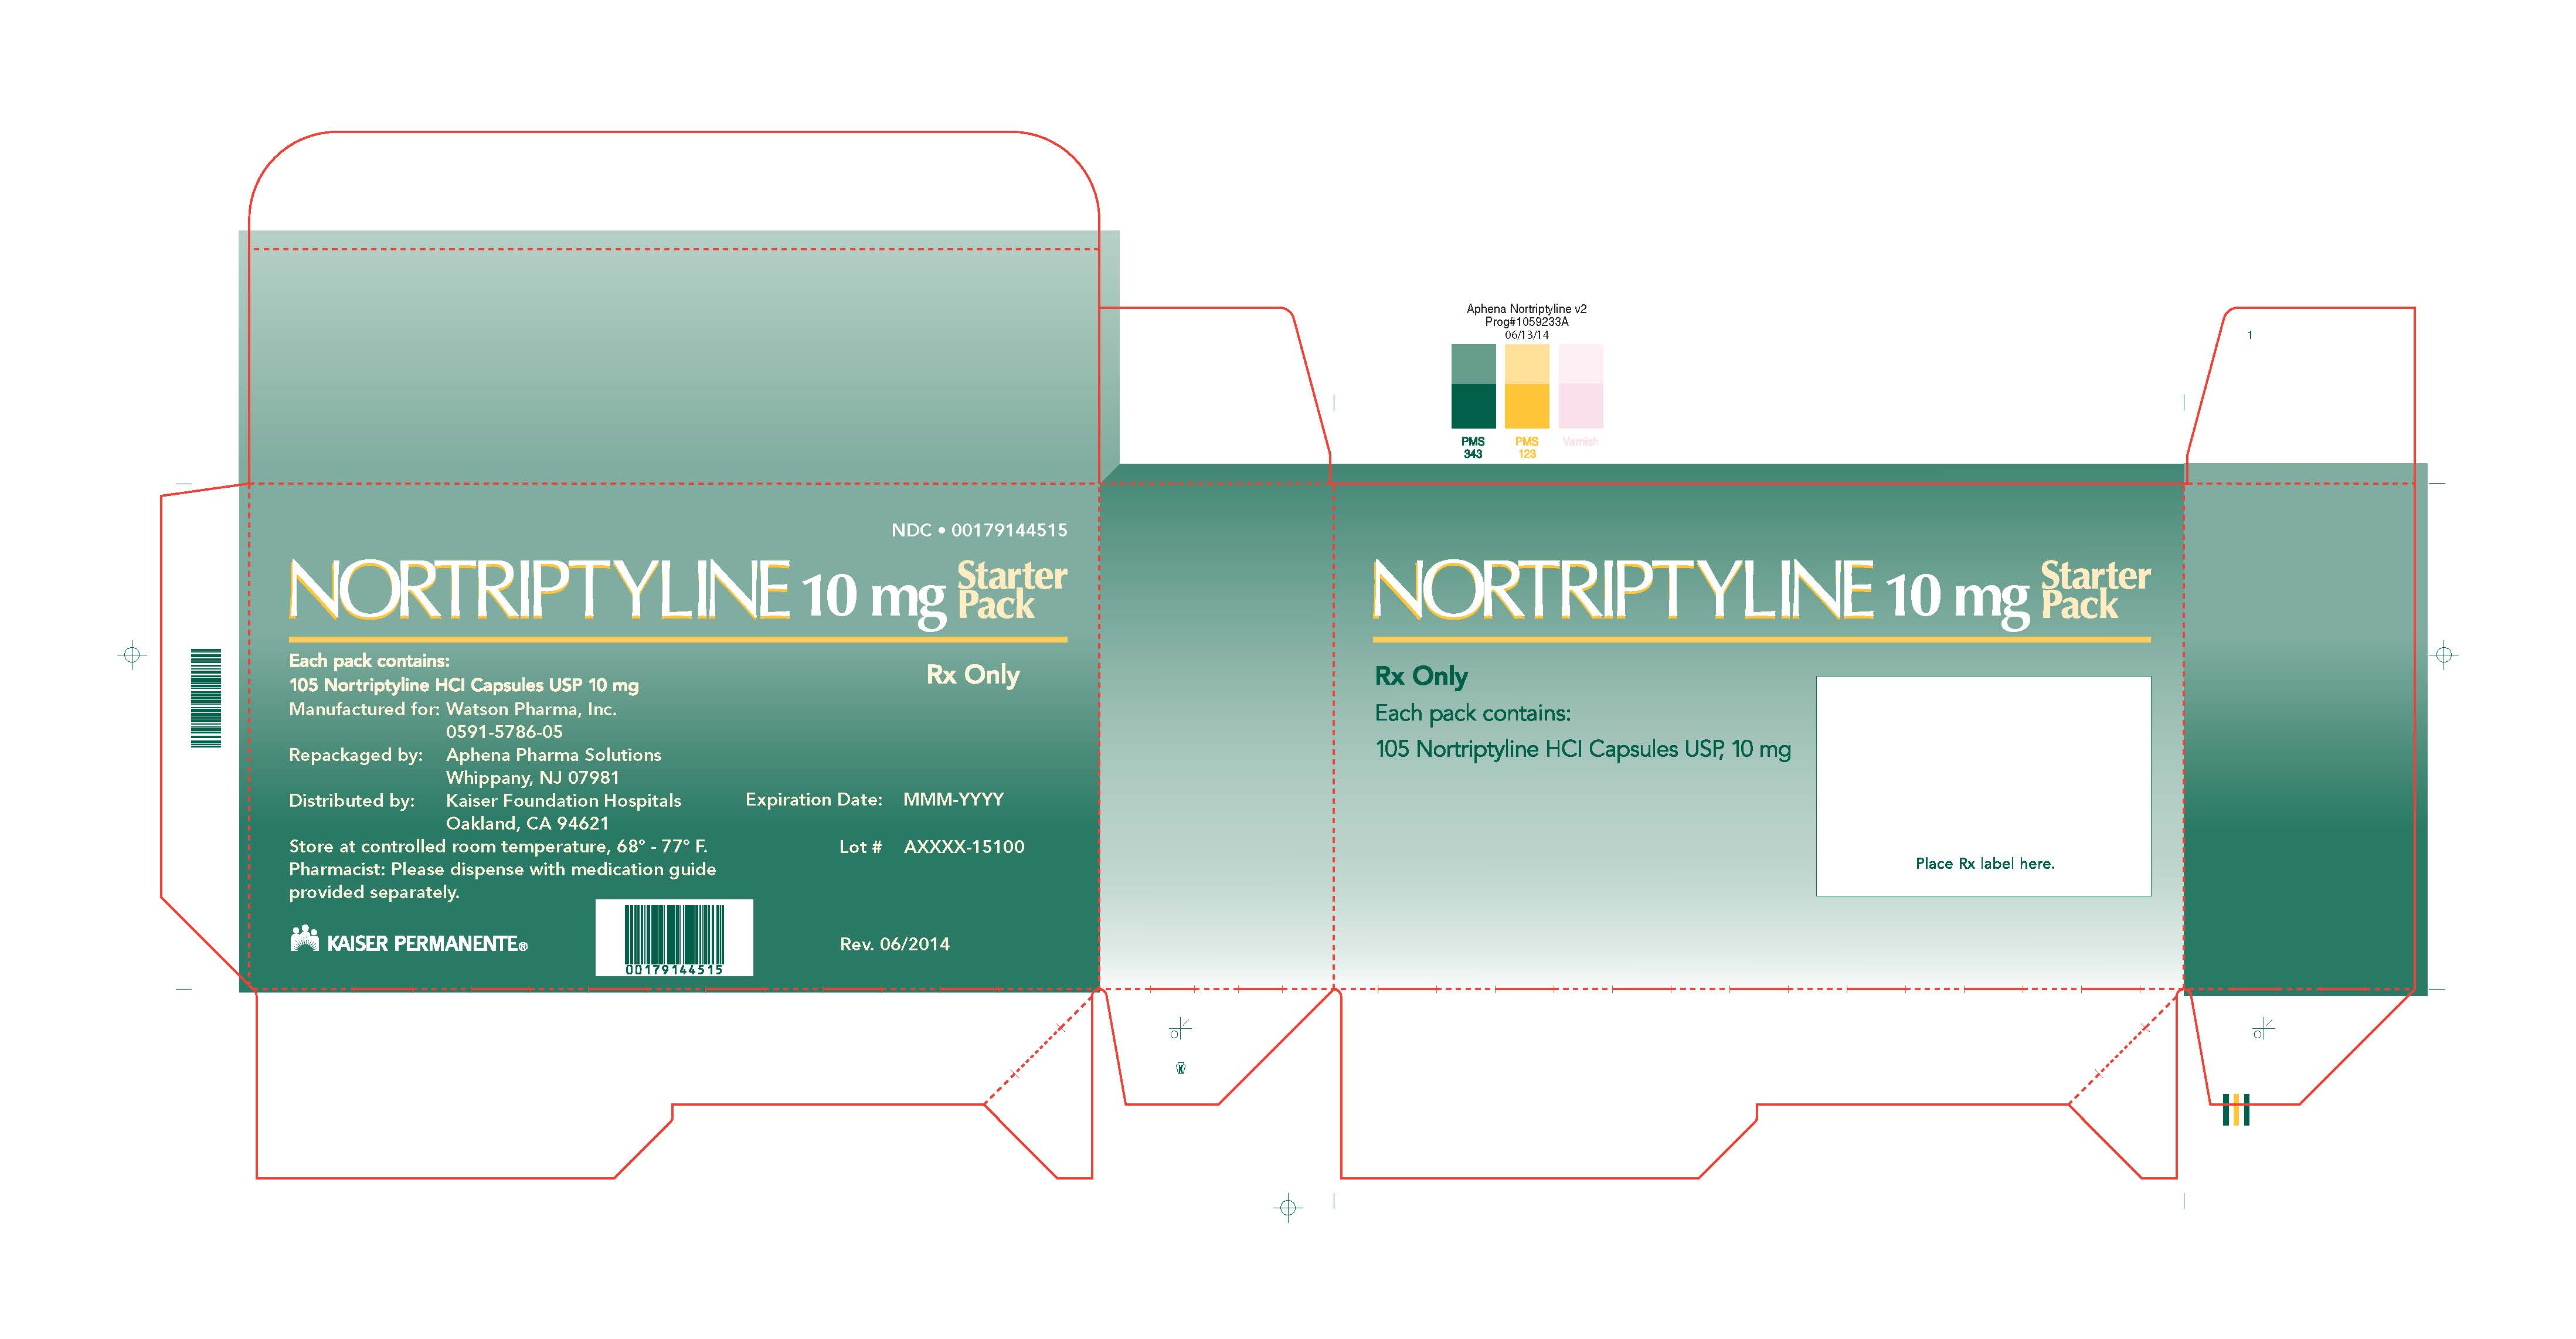 PRINCIPAL DISPLAY PANEL NDC 0179-1445-15 Nortriptyline Hydrochloride Capsules USP 10 mg*